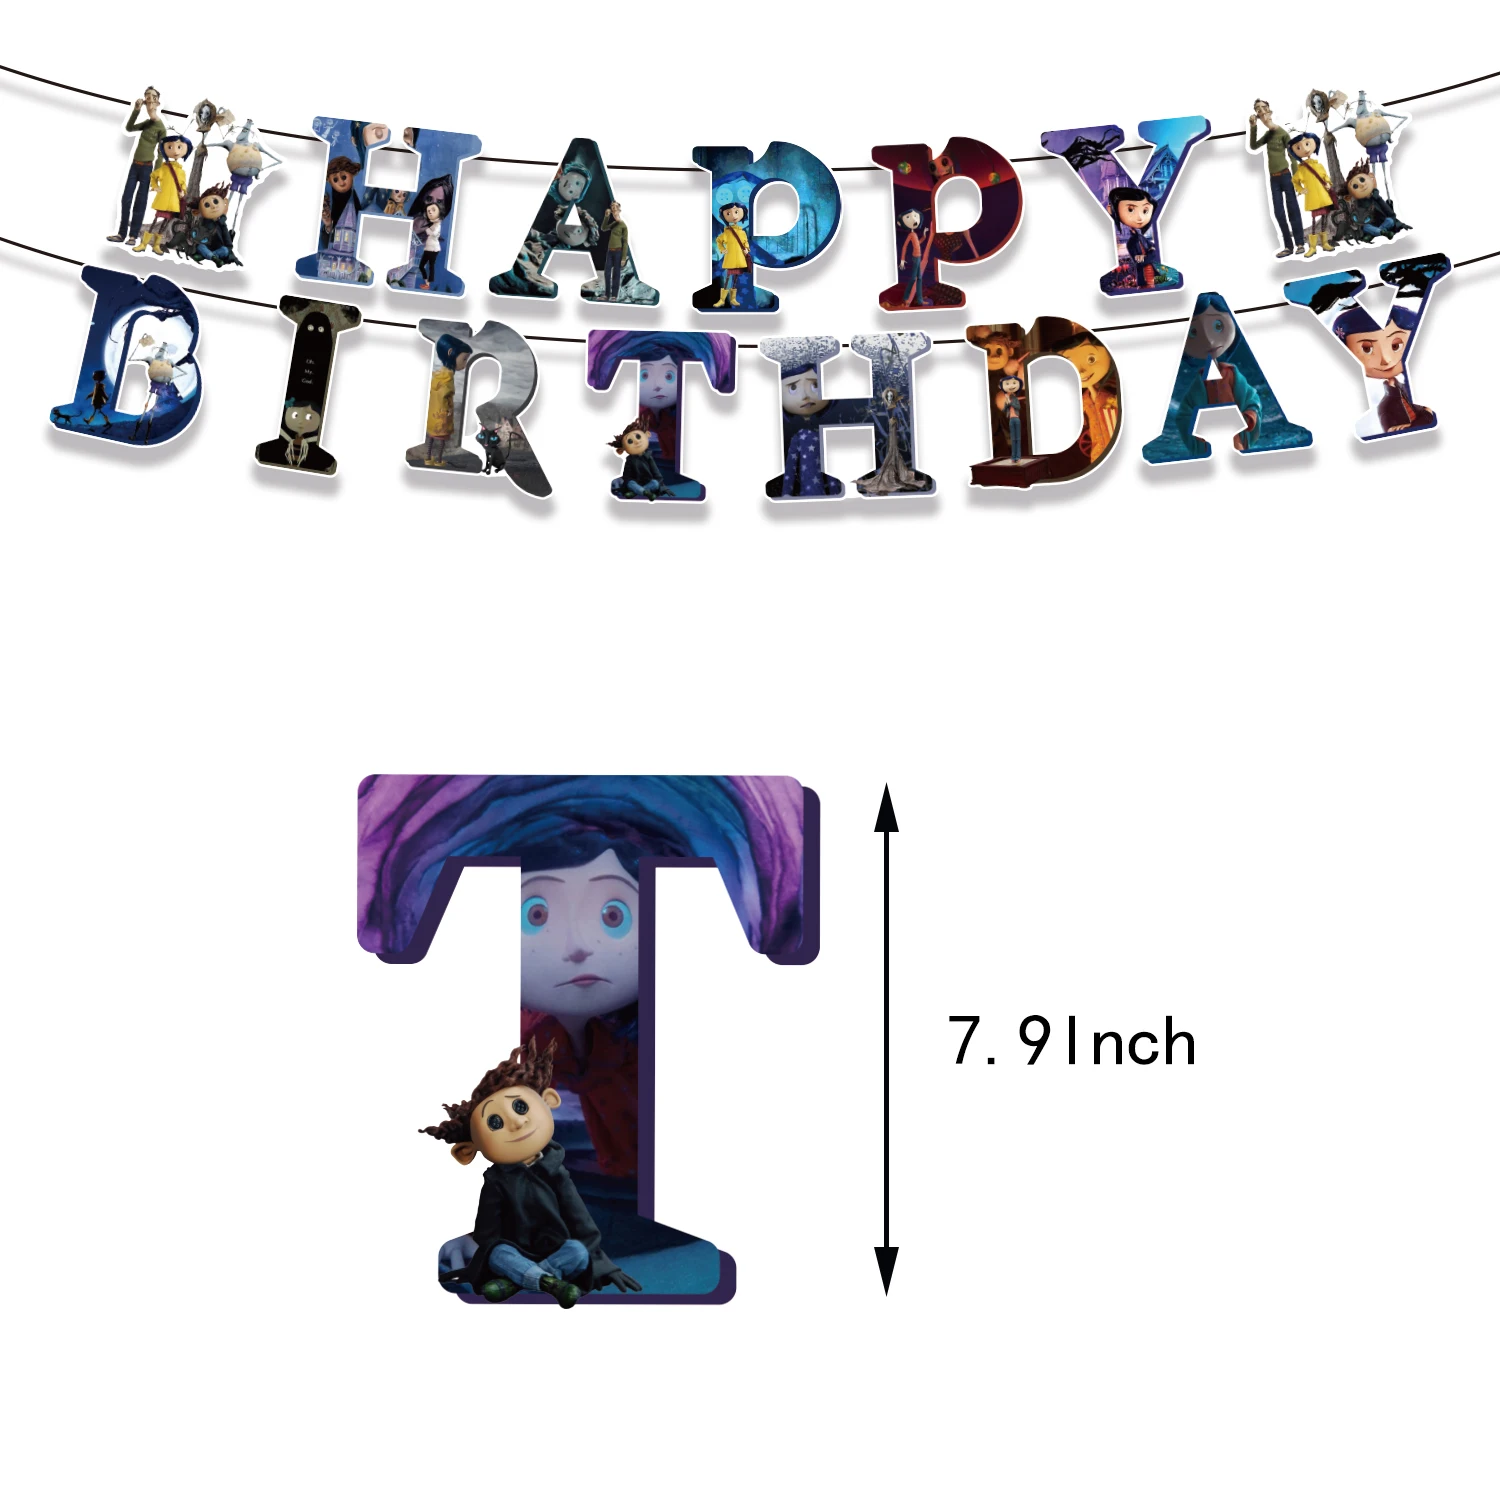 16 Coraline Birthday Party decorations ideas